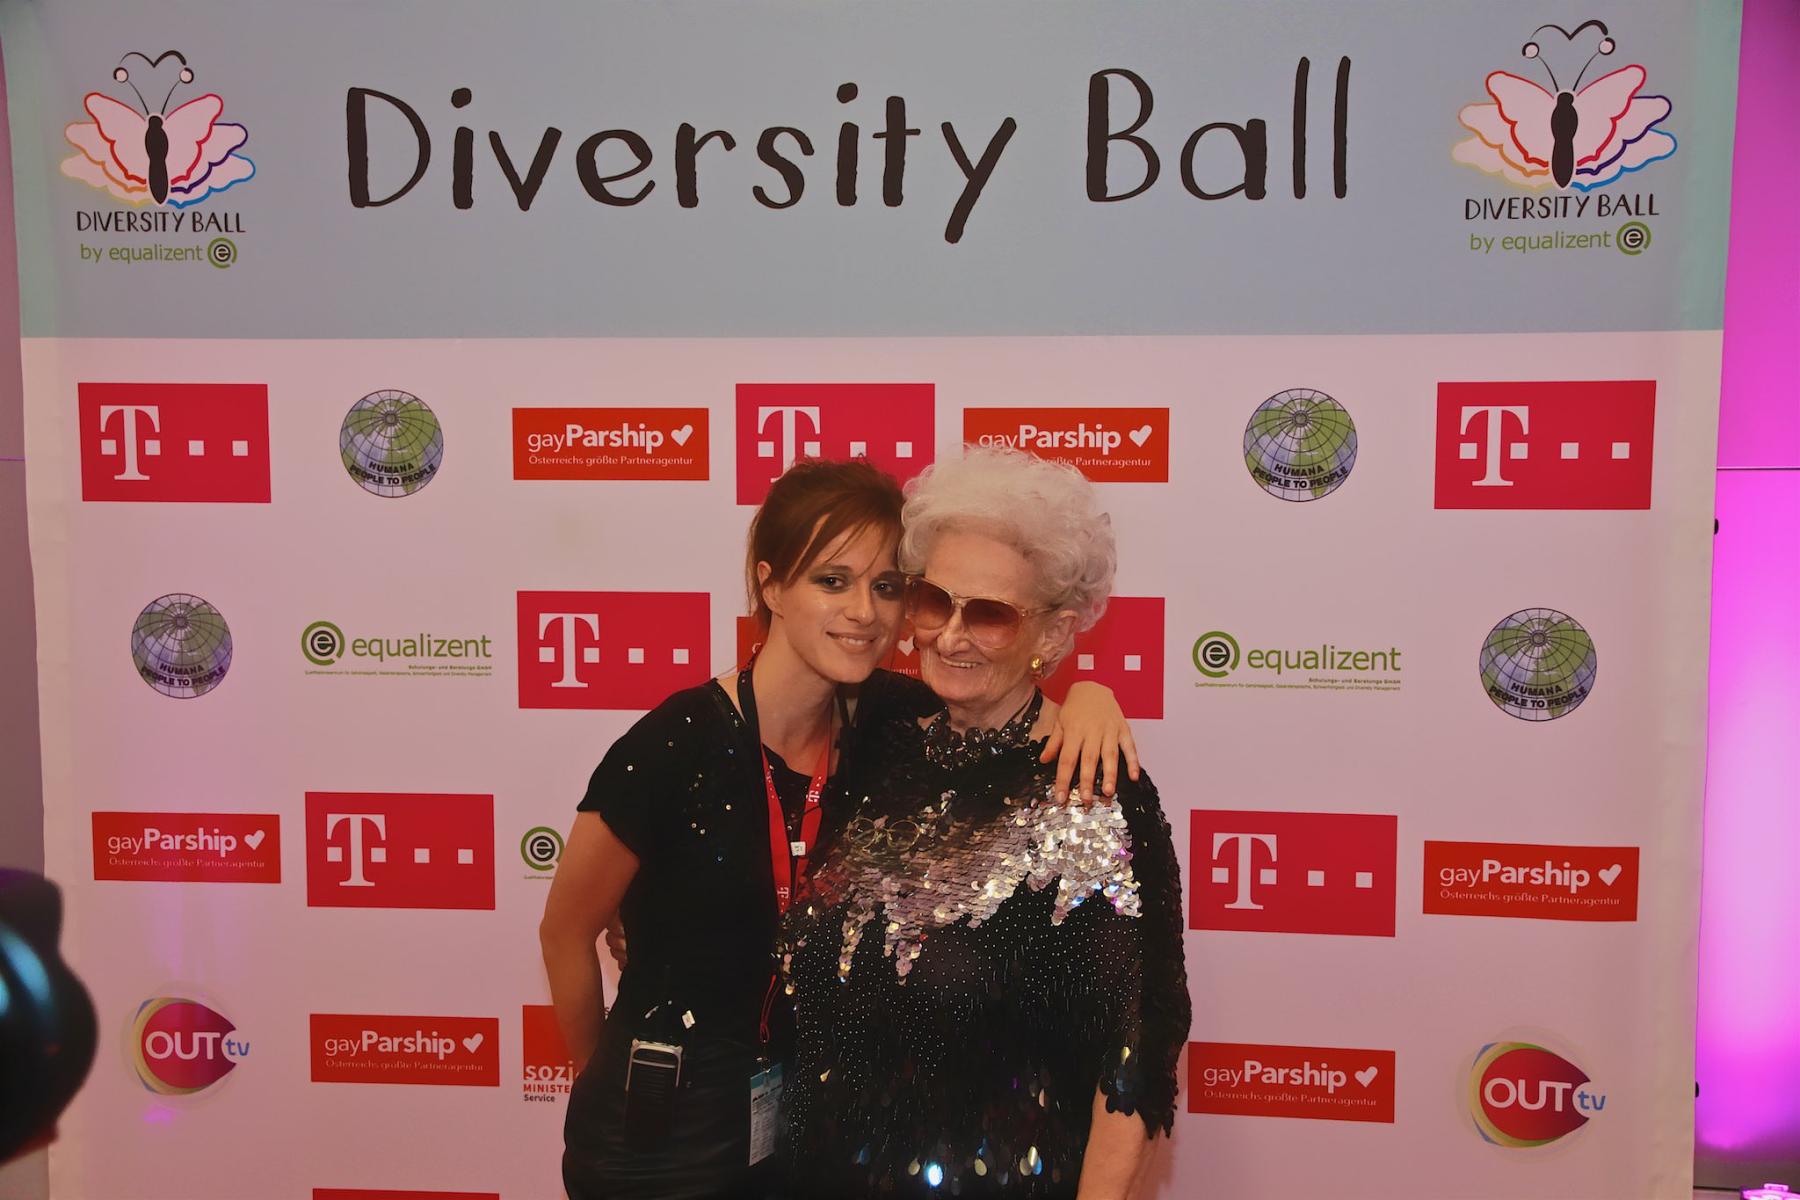 Diversity Ball 2018 Vienna